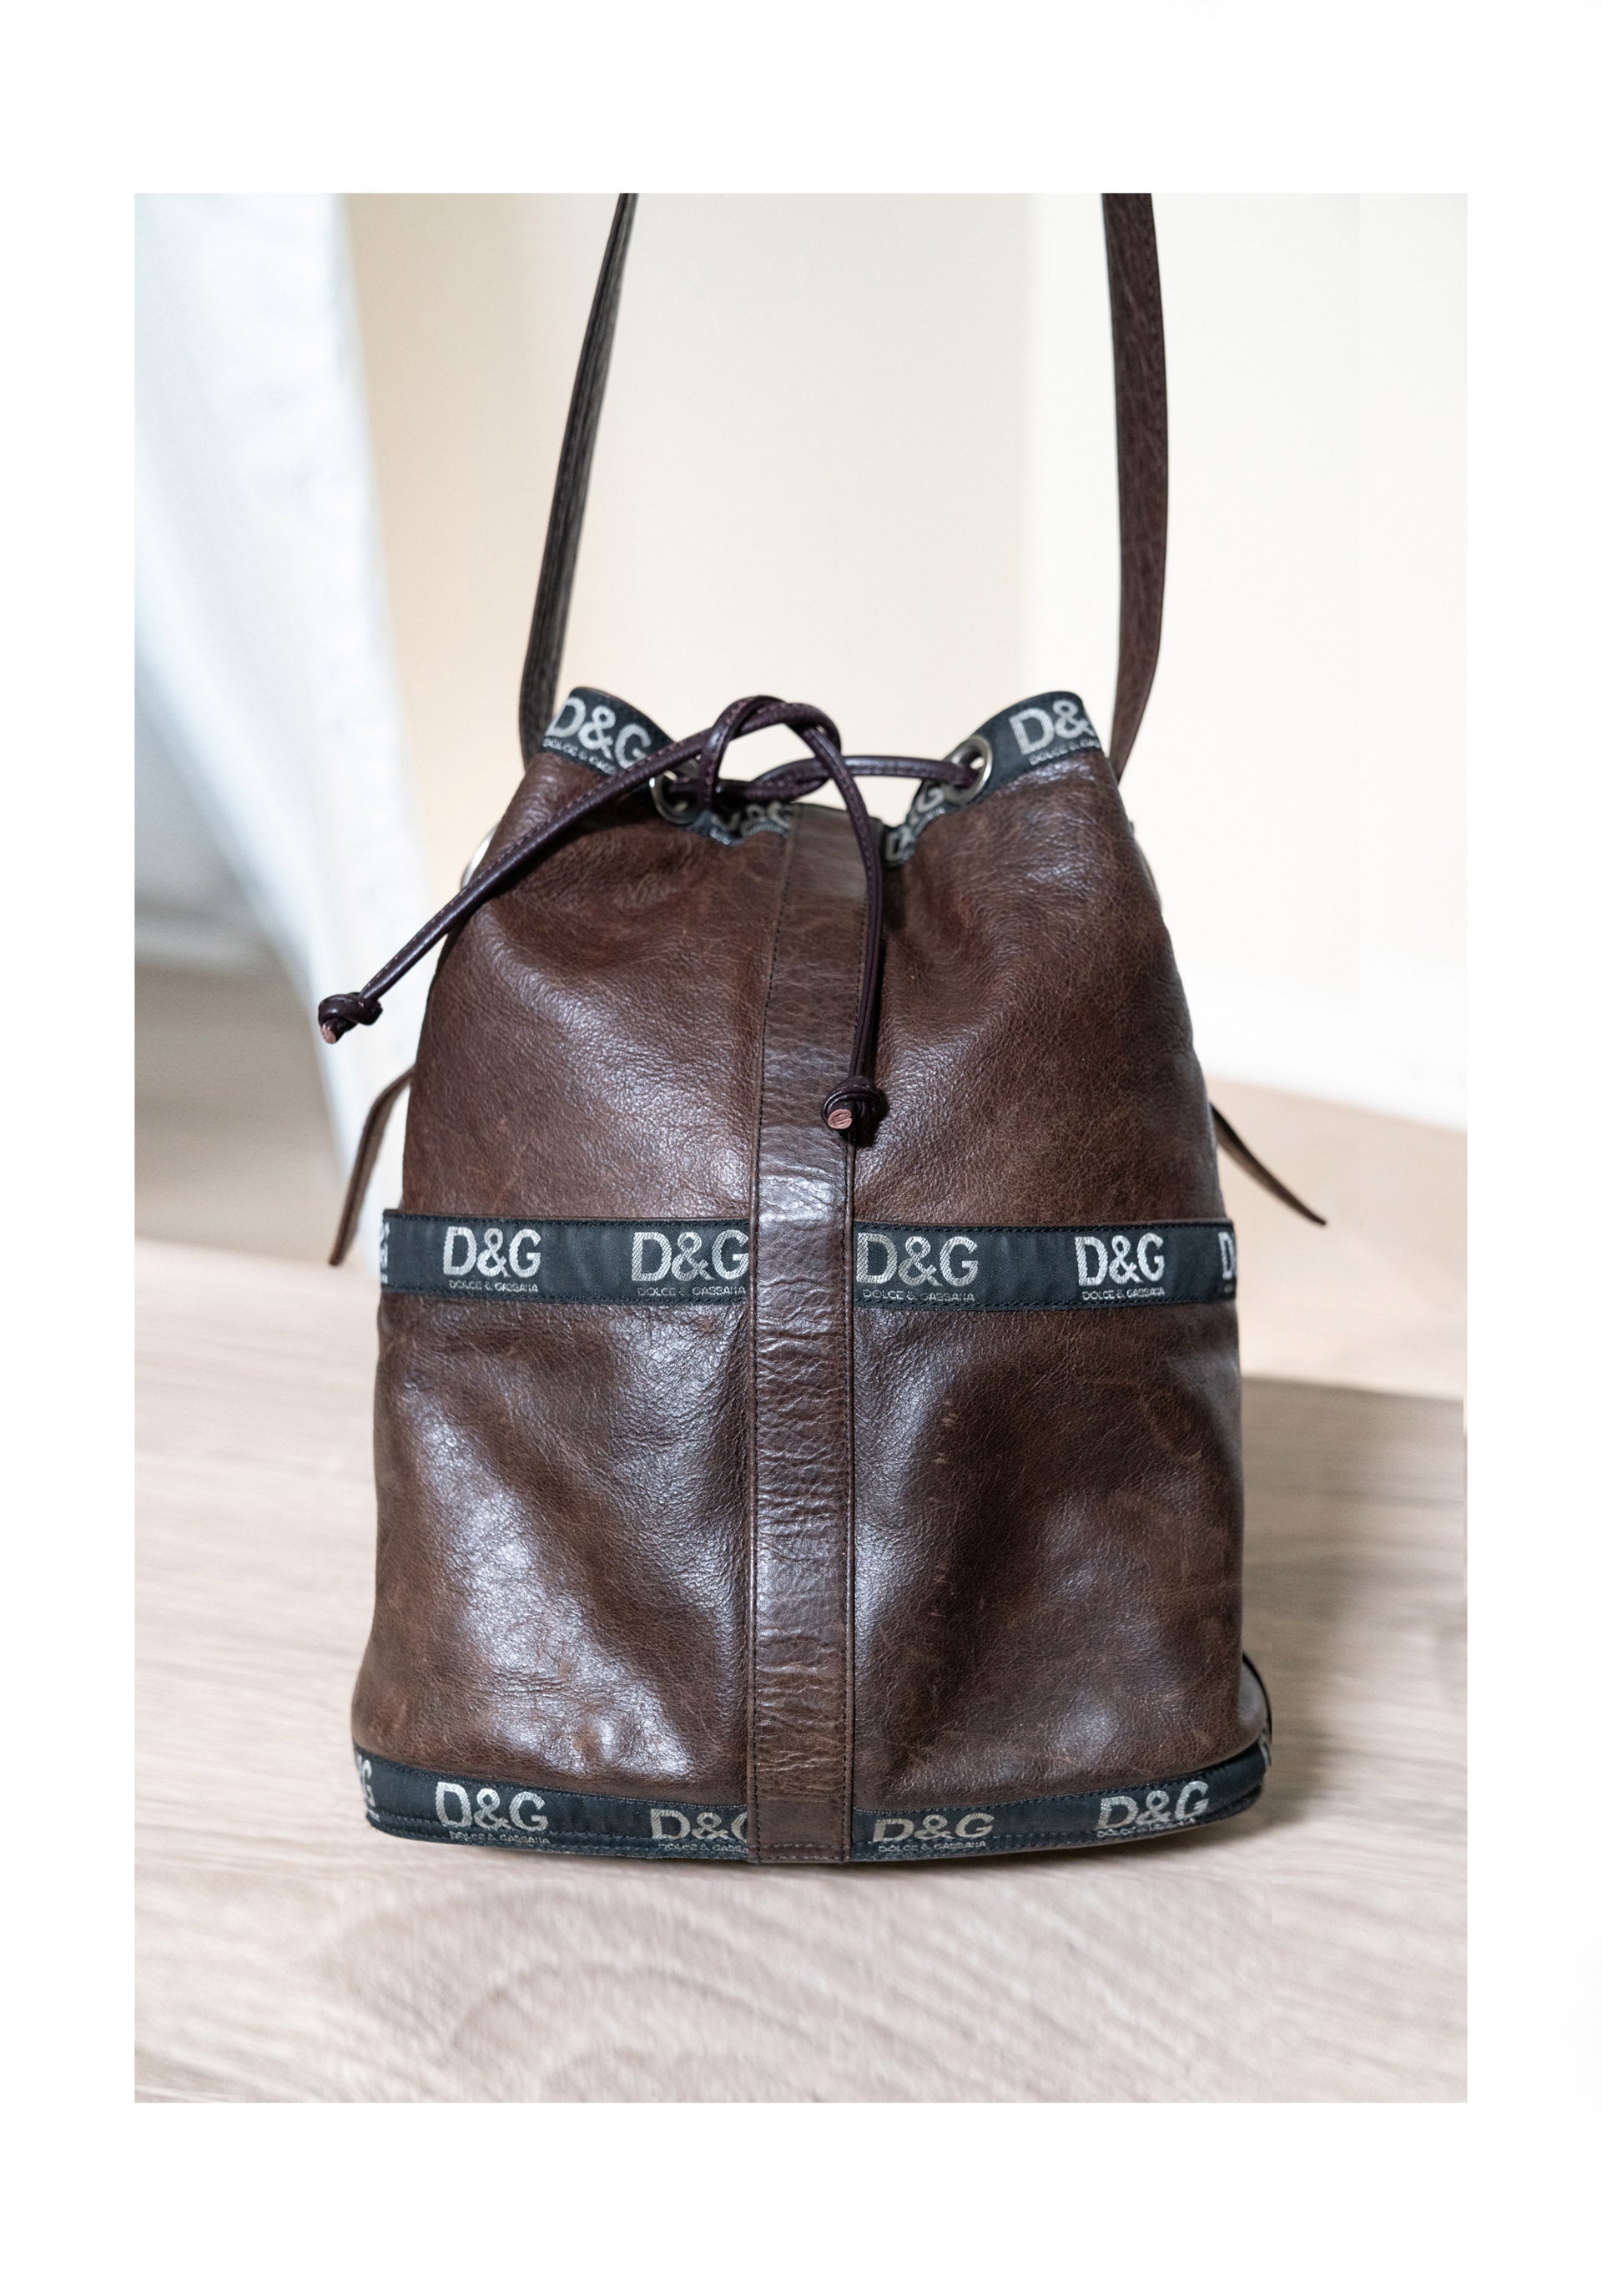 Used Designer Handbags for Sale, Below Retail Prices, ReAdore Shop